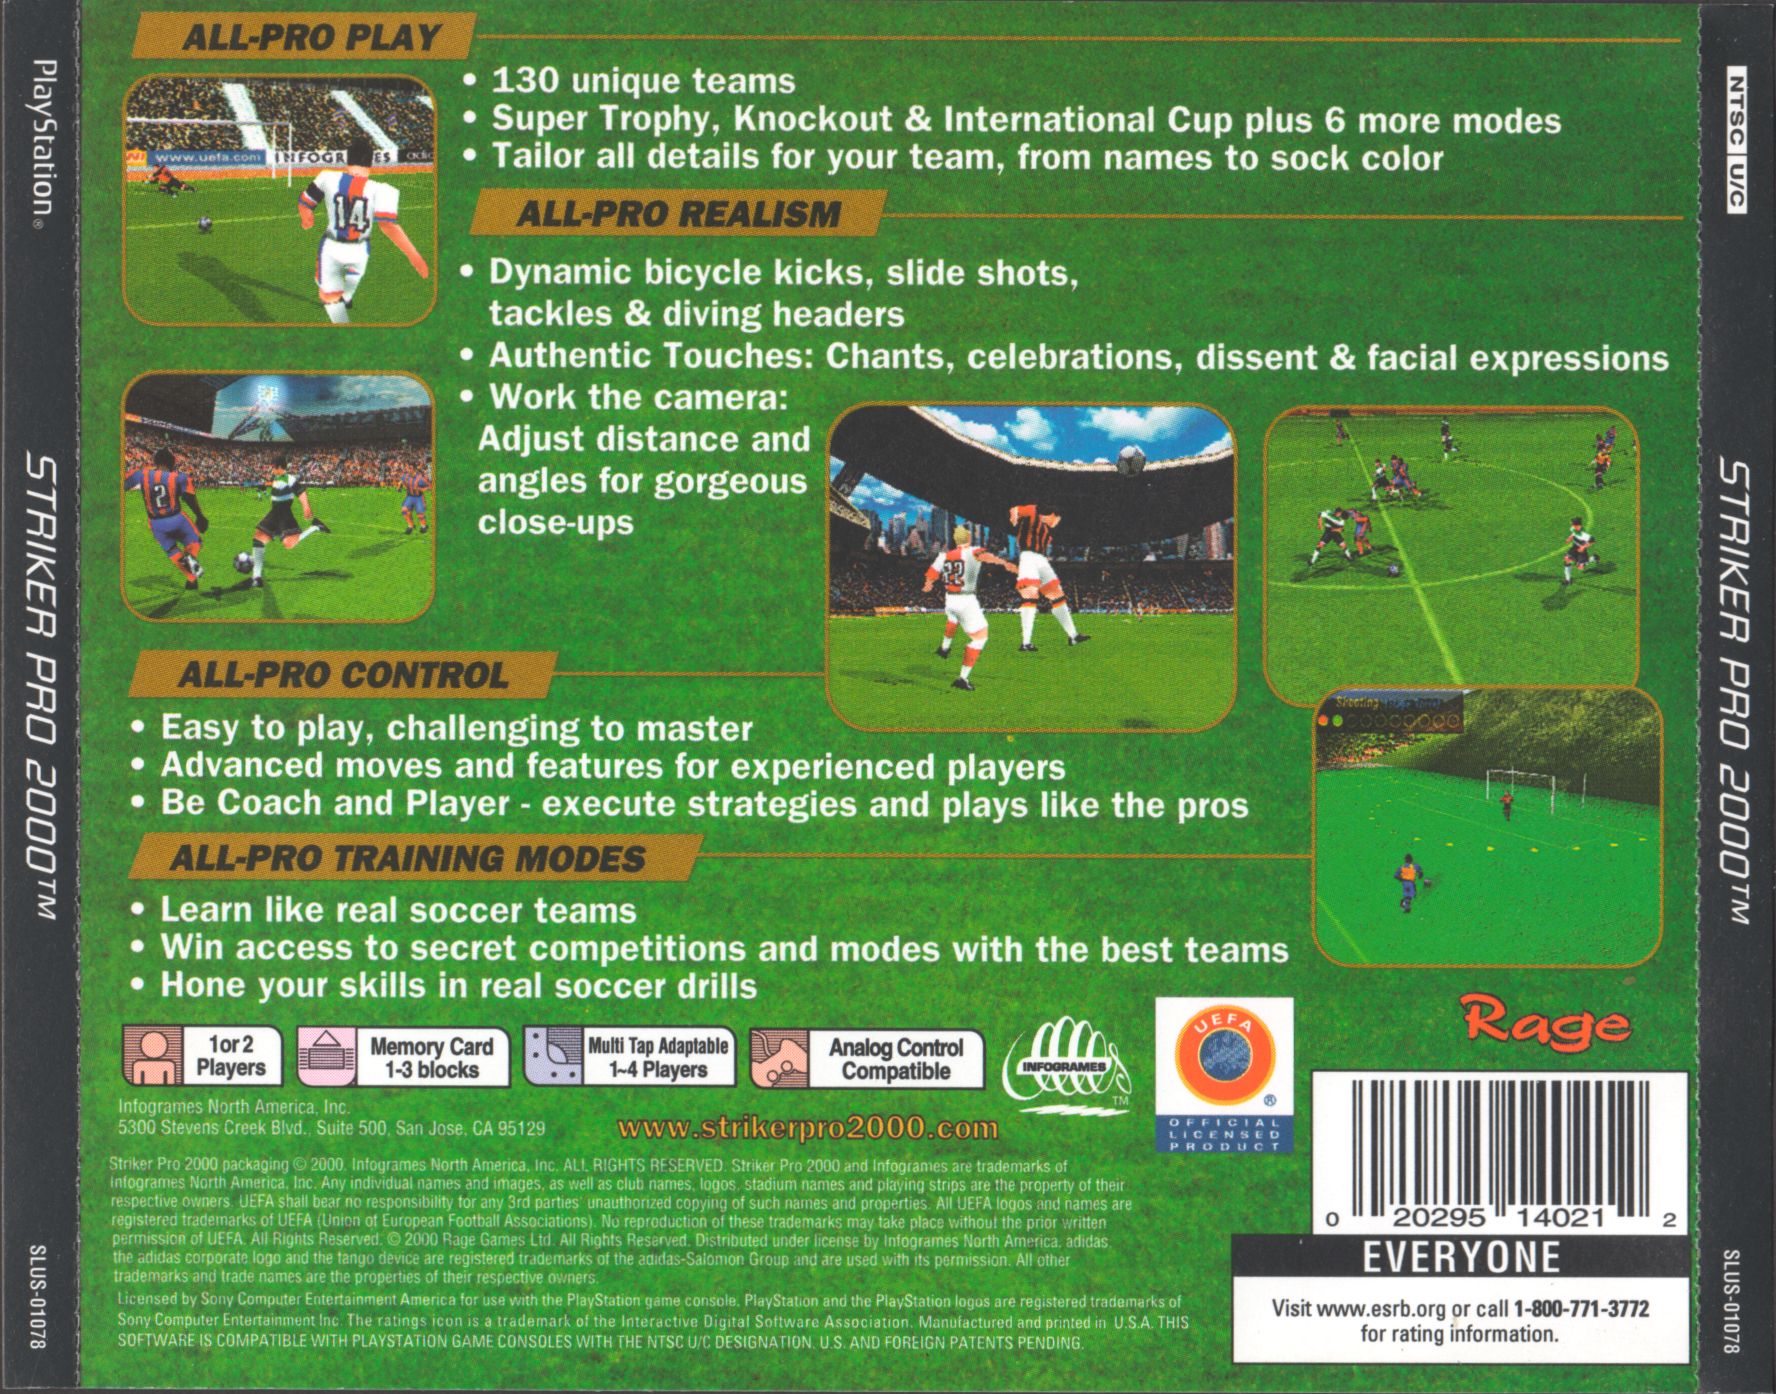 Striker Pro 2000 PSX cover